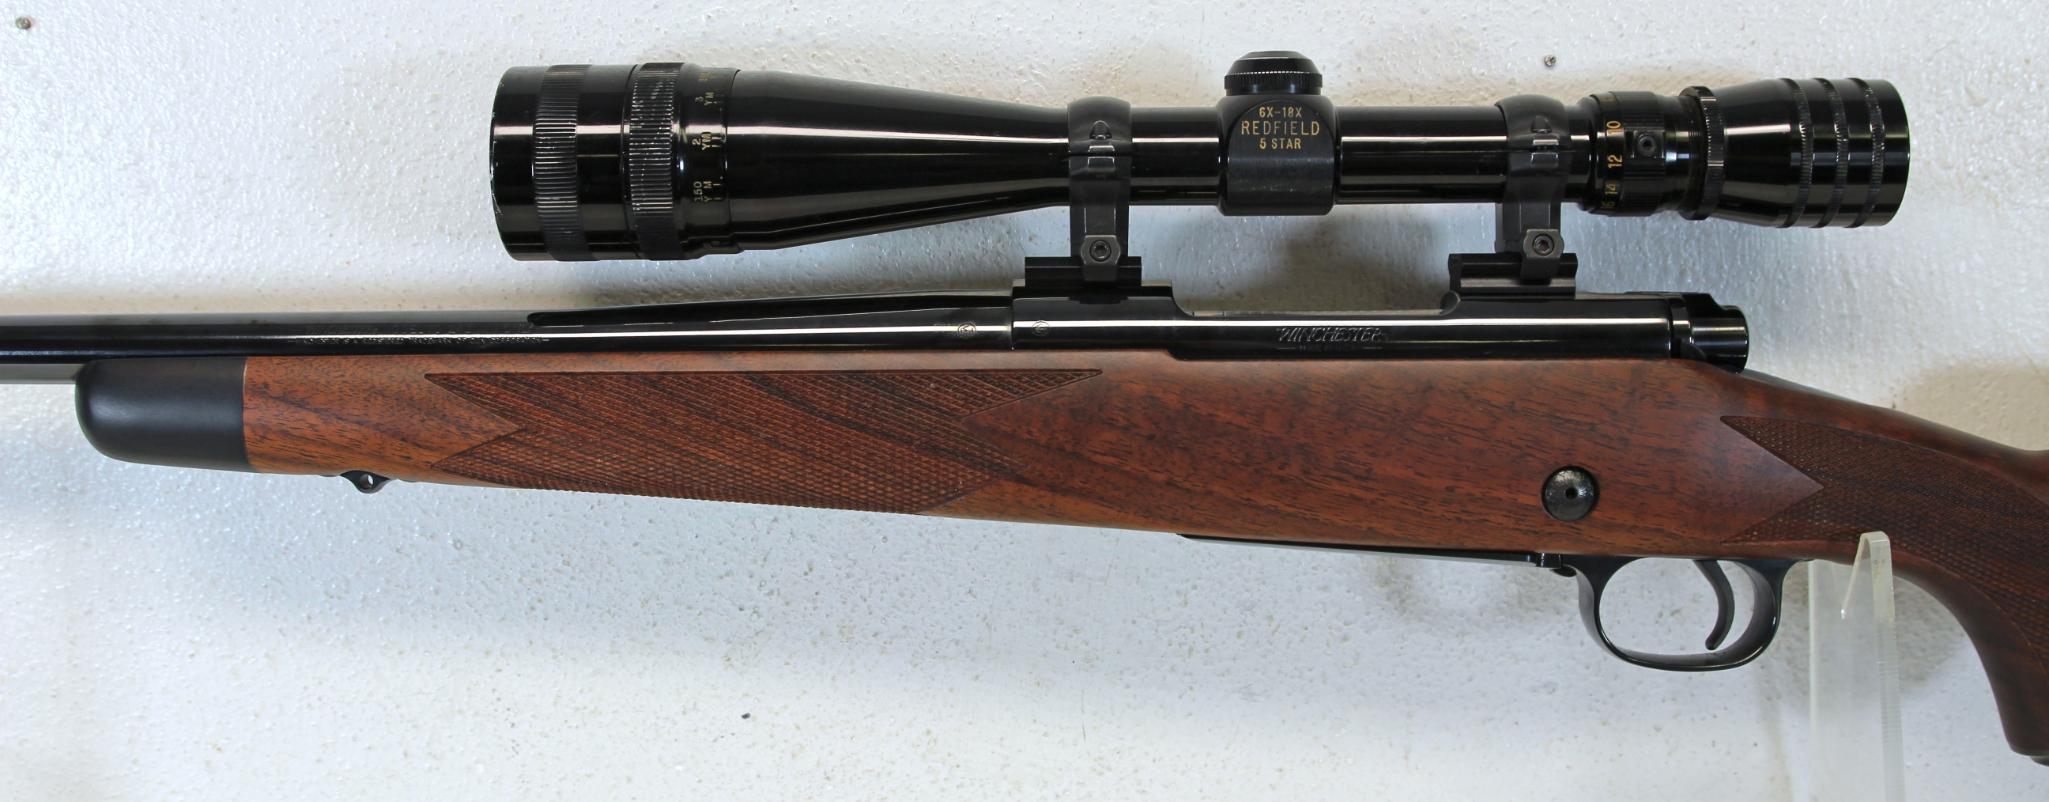 Winchester Model 70 Super Grade .243 Win Bolt Action Rifle w/Redfield 5 Star 6X-18X Scope Lightly